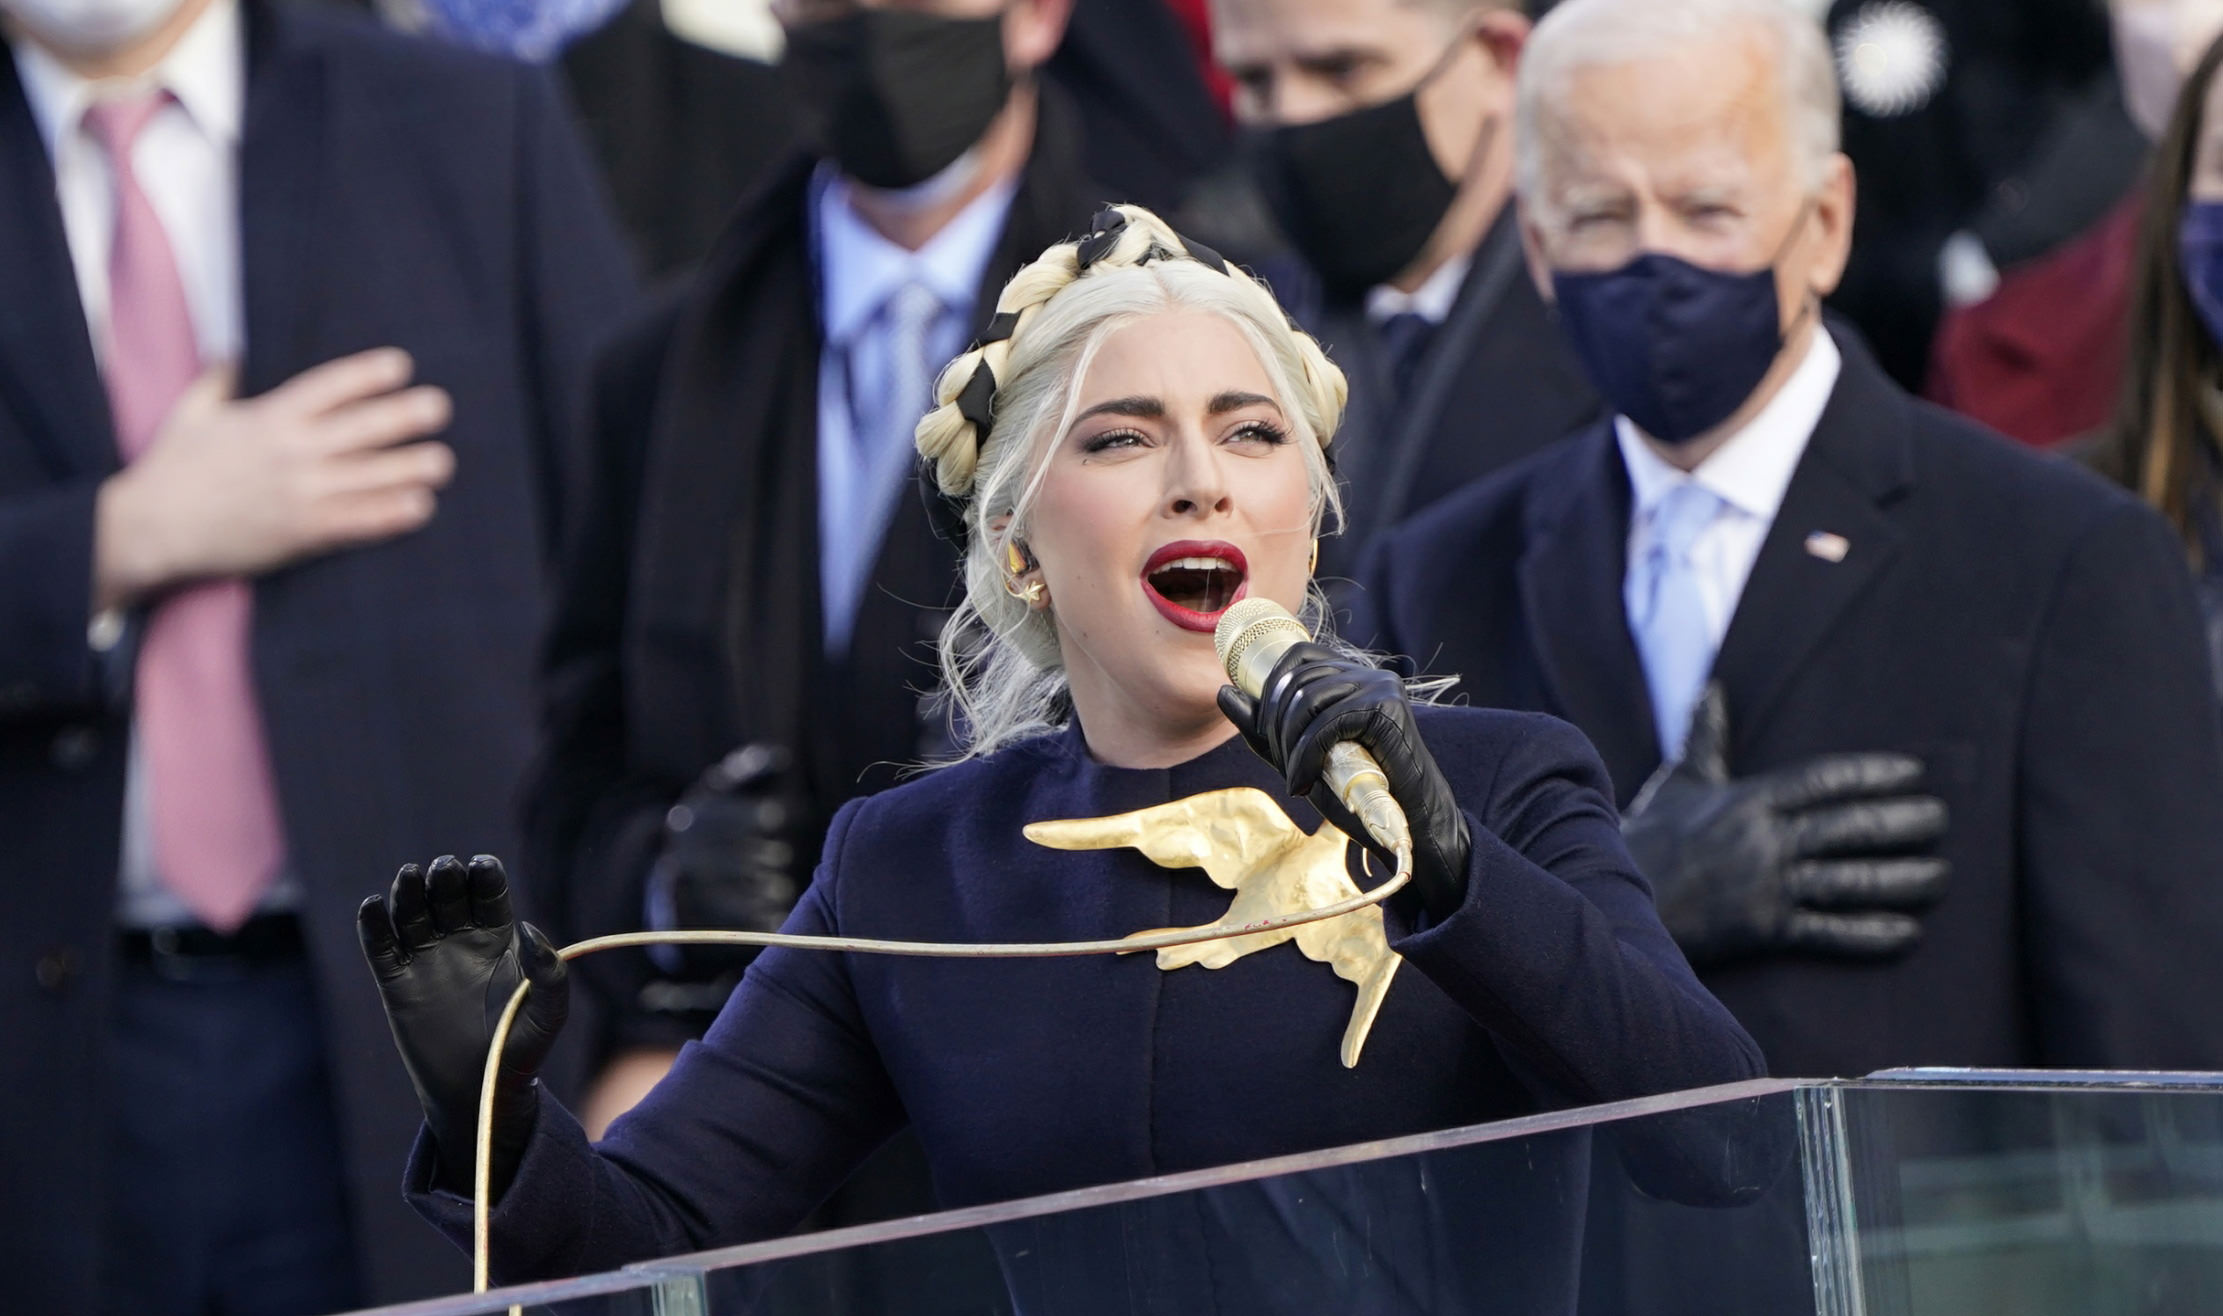 Lady-Gaga-Sings-Anthem-President-Joe-Biden-Inauguration-Fashion-Schiaparelli-Couture-Tom-Lorenzo-Site-1.jpg